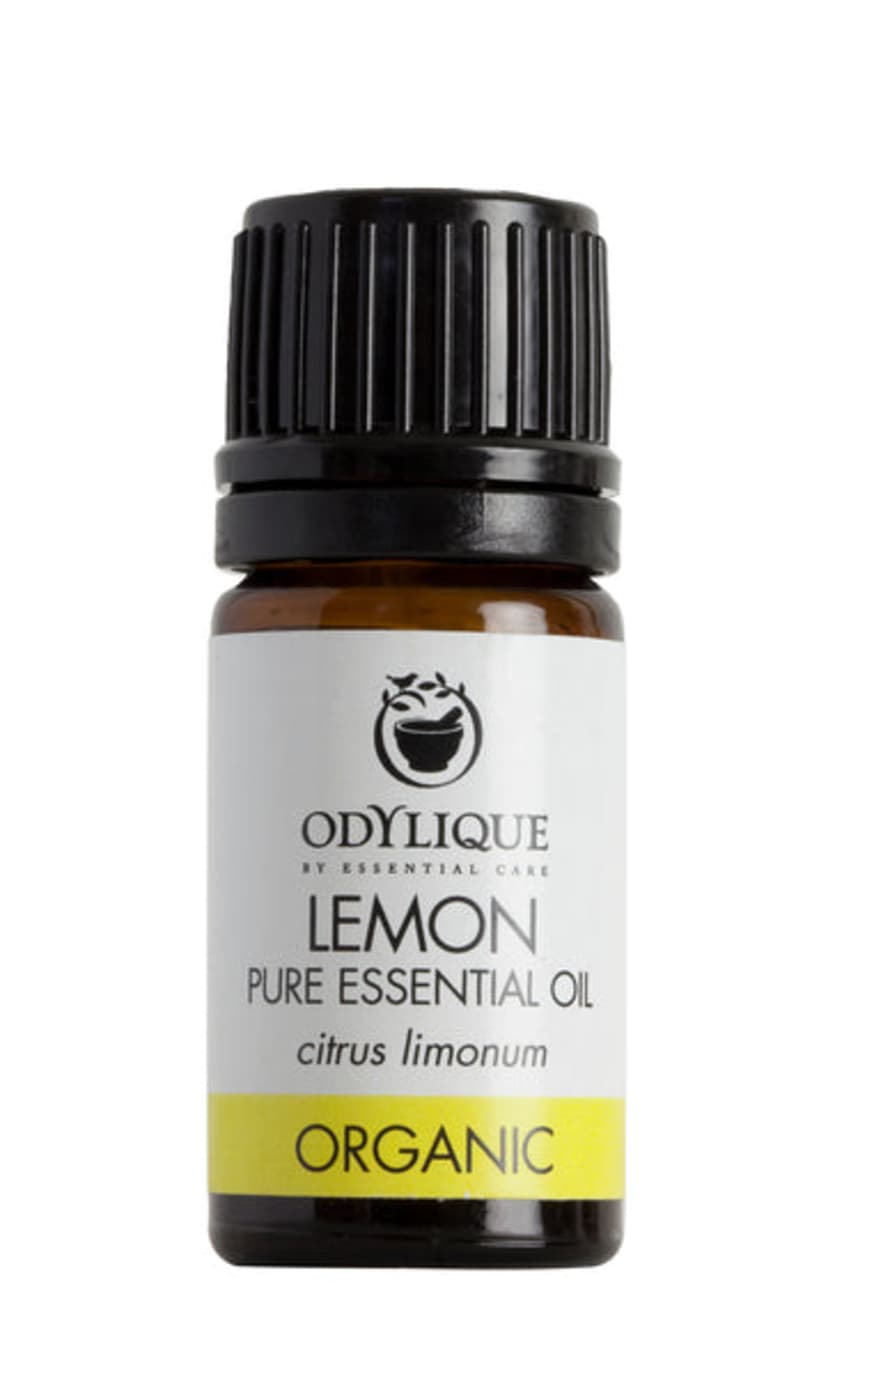 Odylique Organic Lemon Essential Oil